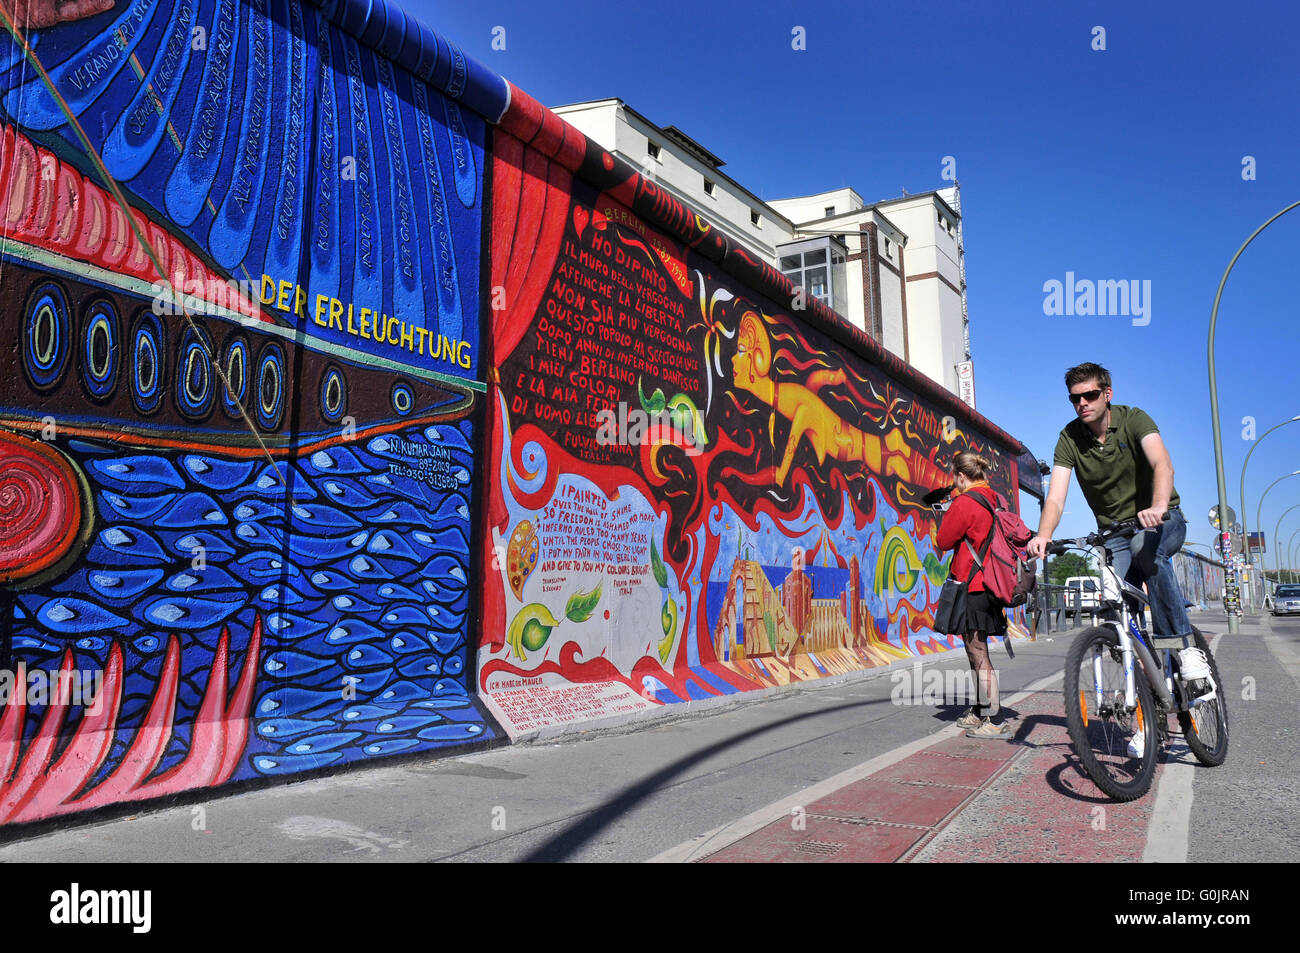 La East Side Gallery, pittura murale, pittura, open-air gallery, il muro di Berlino, Friedrichshain di Berlino, Germania / Berliner Mauer Foto Stock